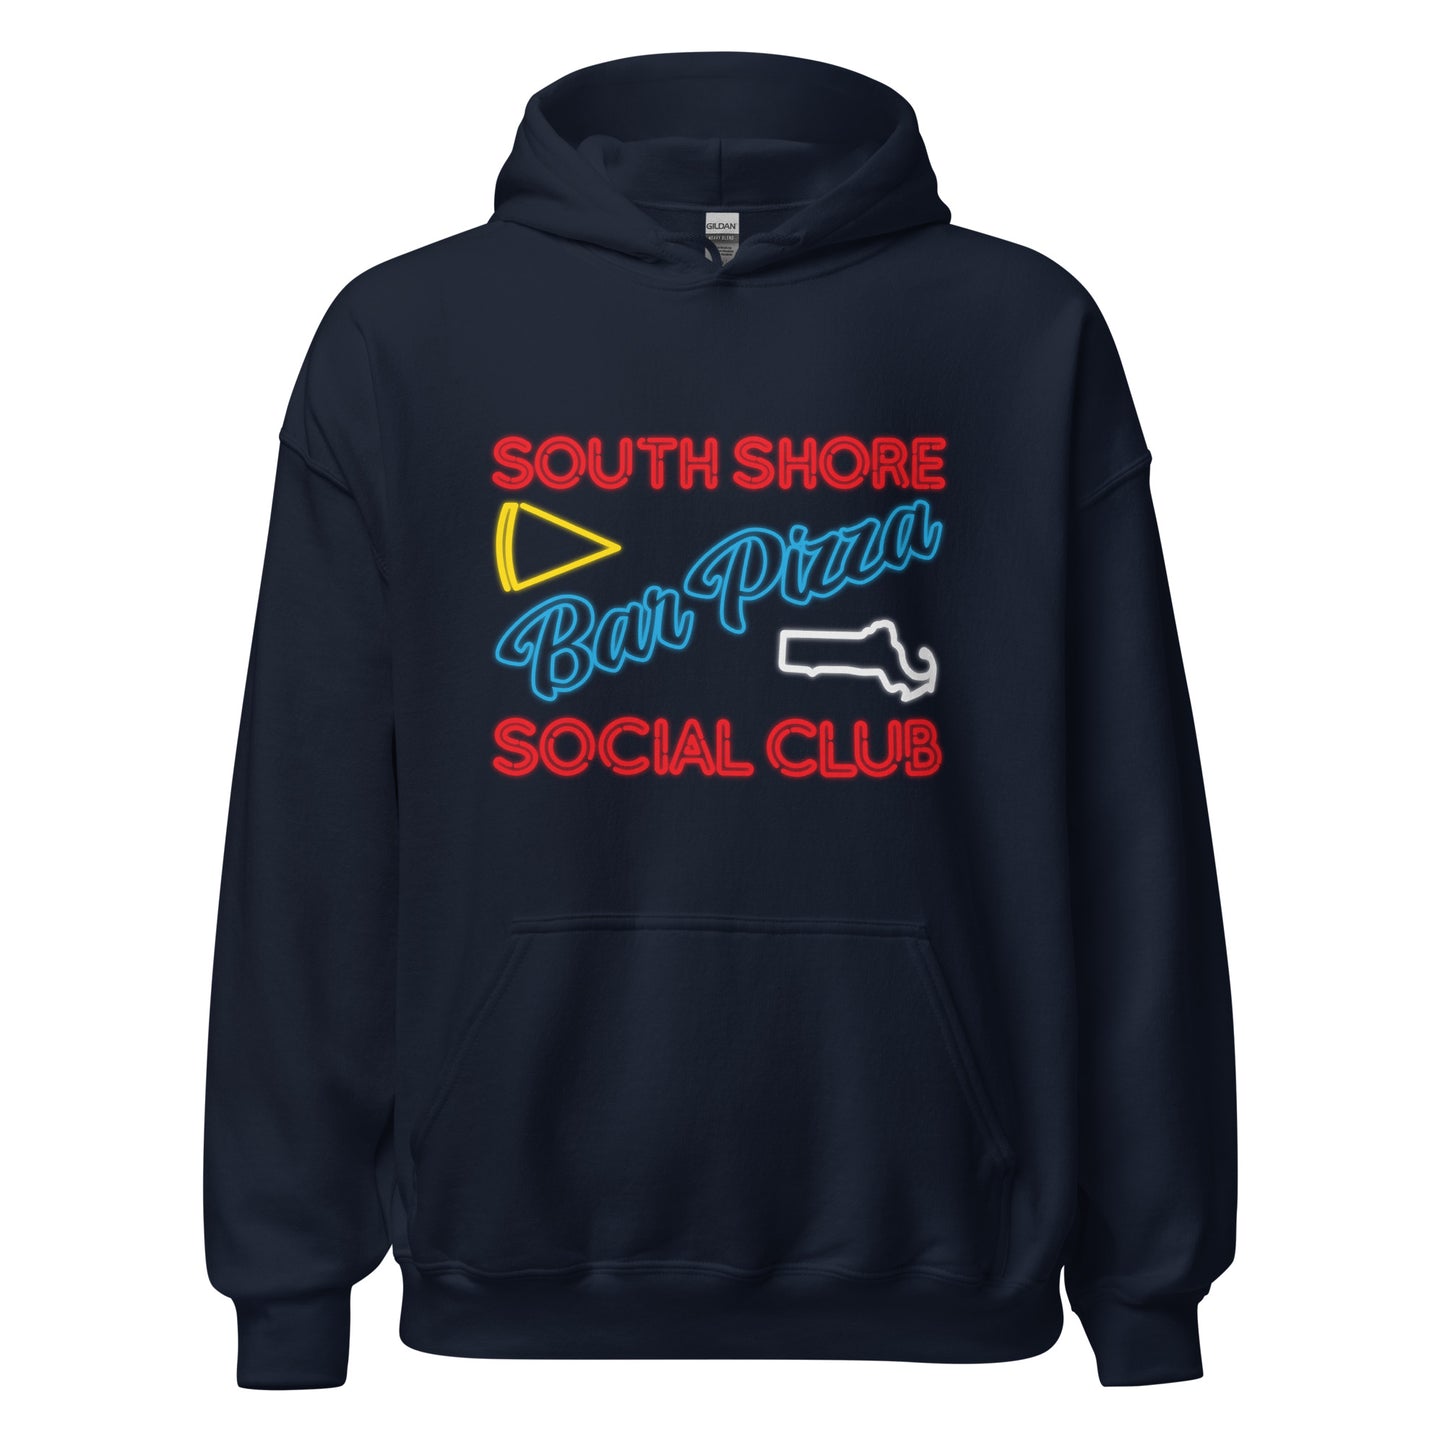 South Shore Bar Pizza Social Club Hoodie